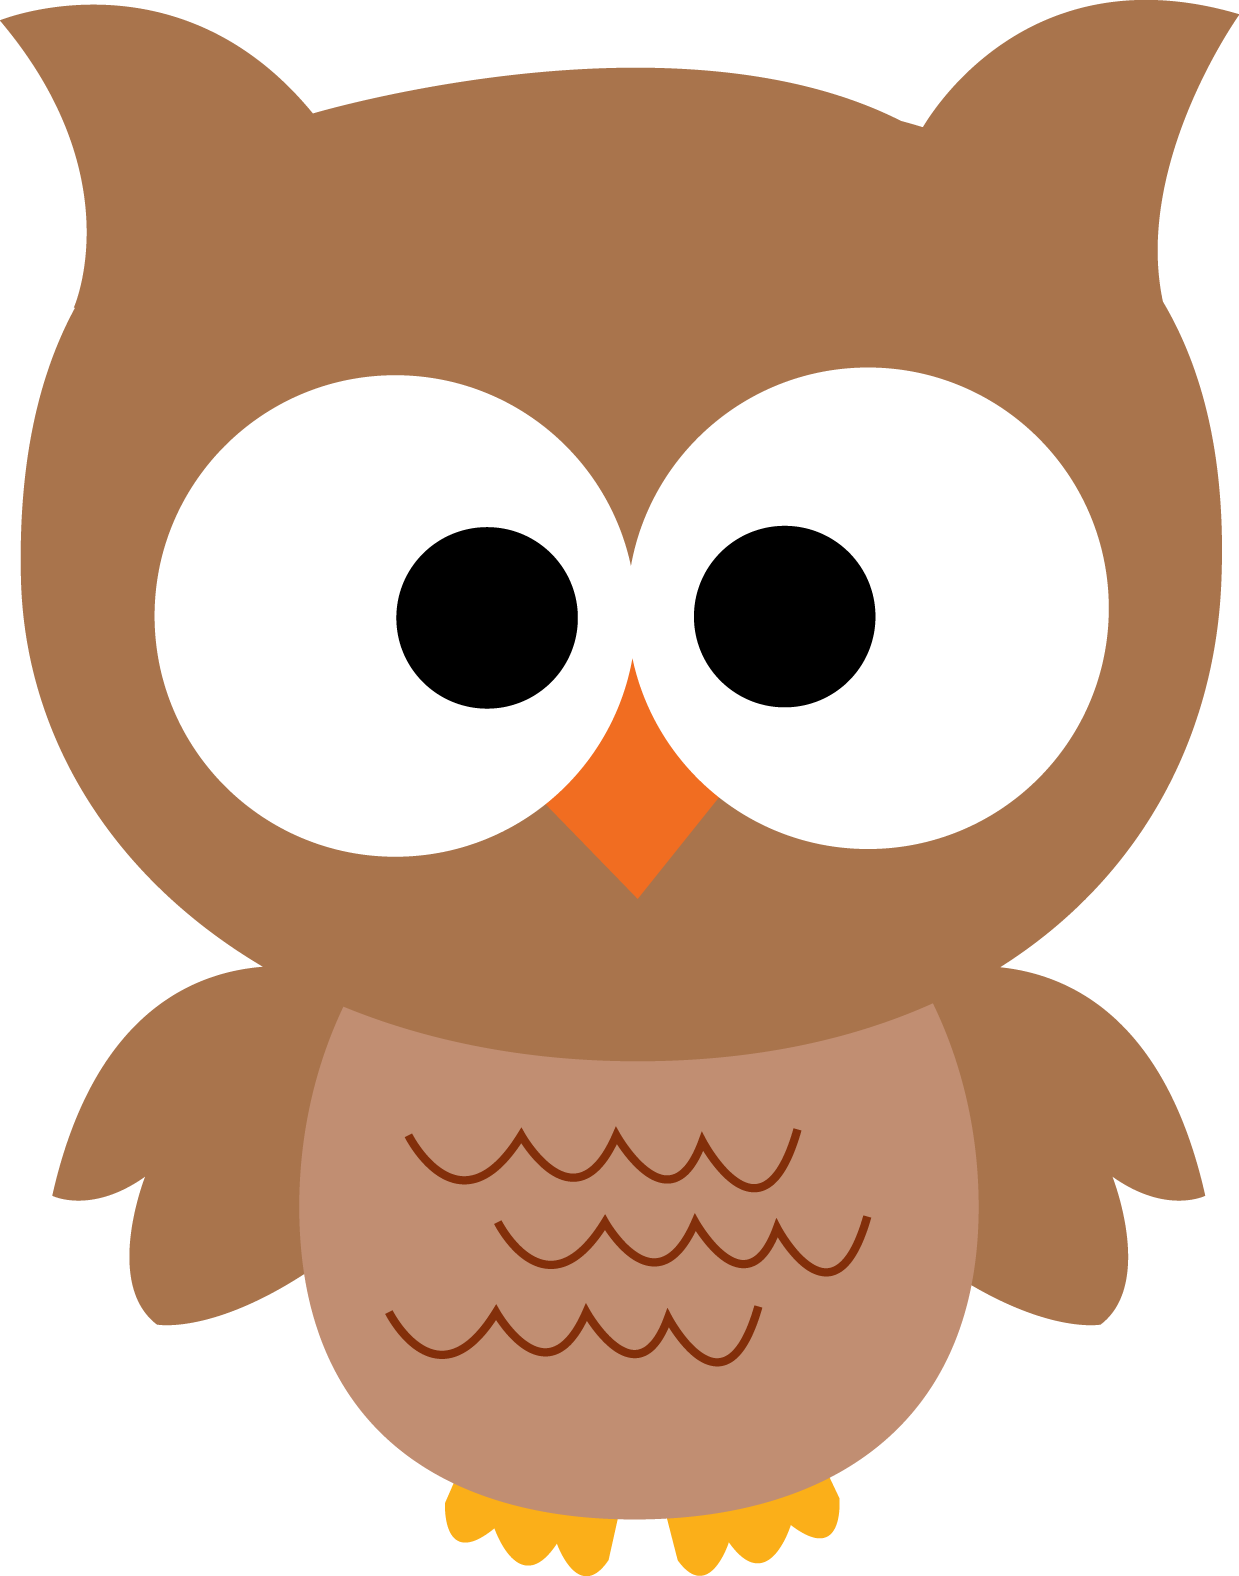 Owl Outline Clip Art 